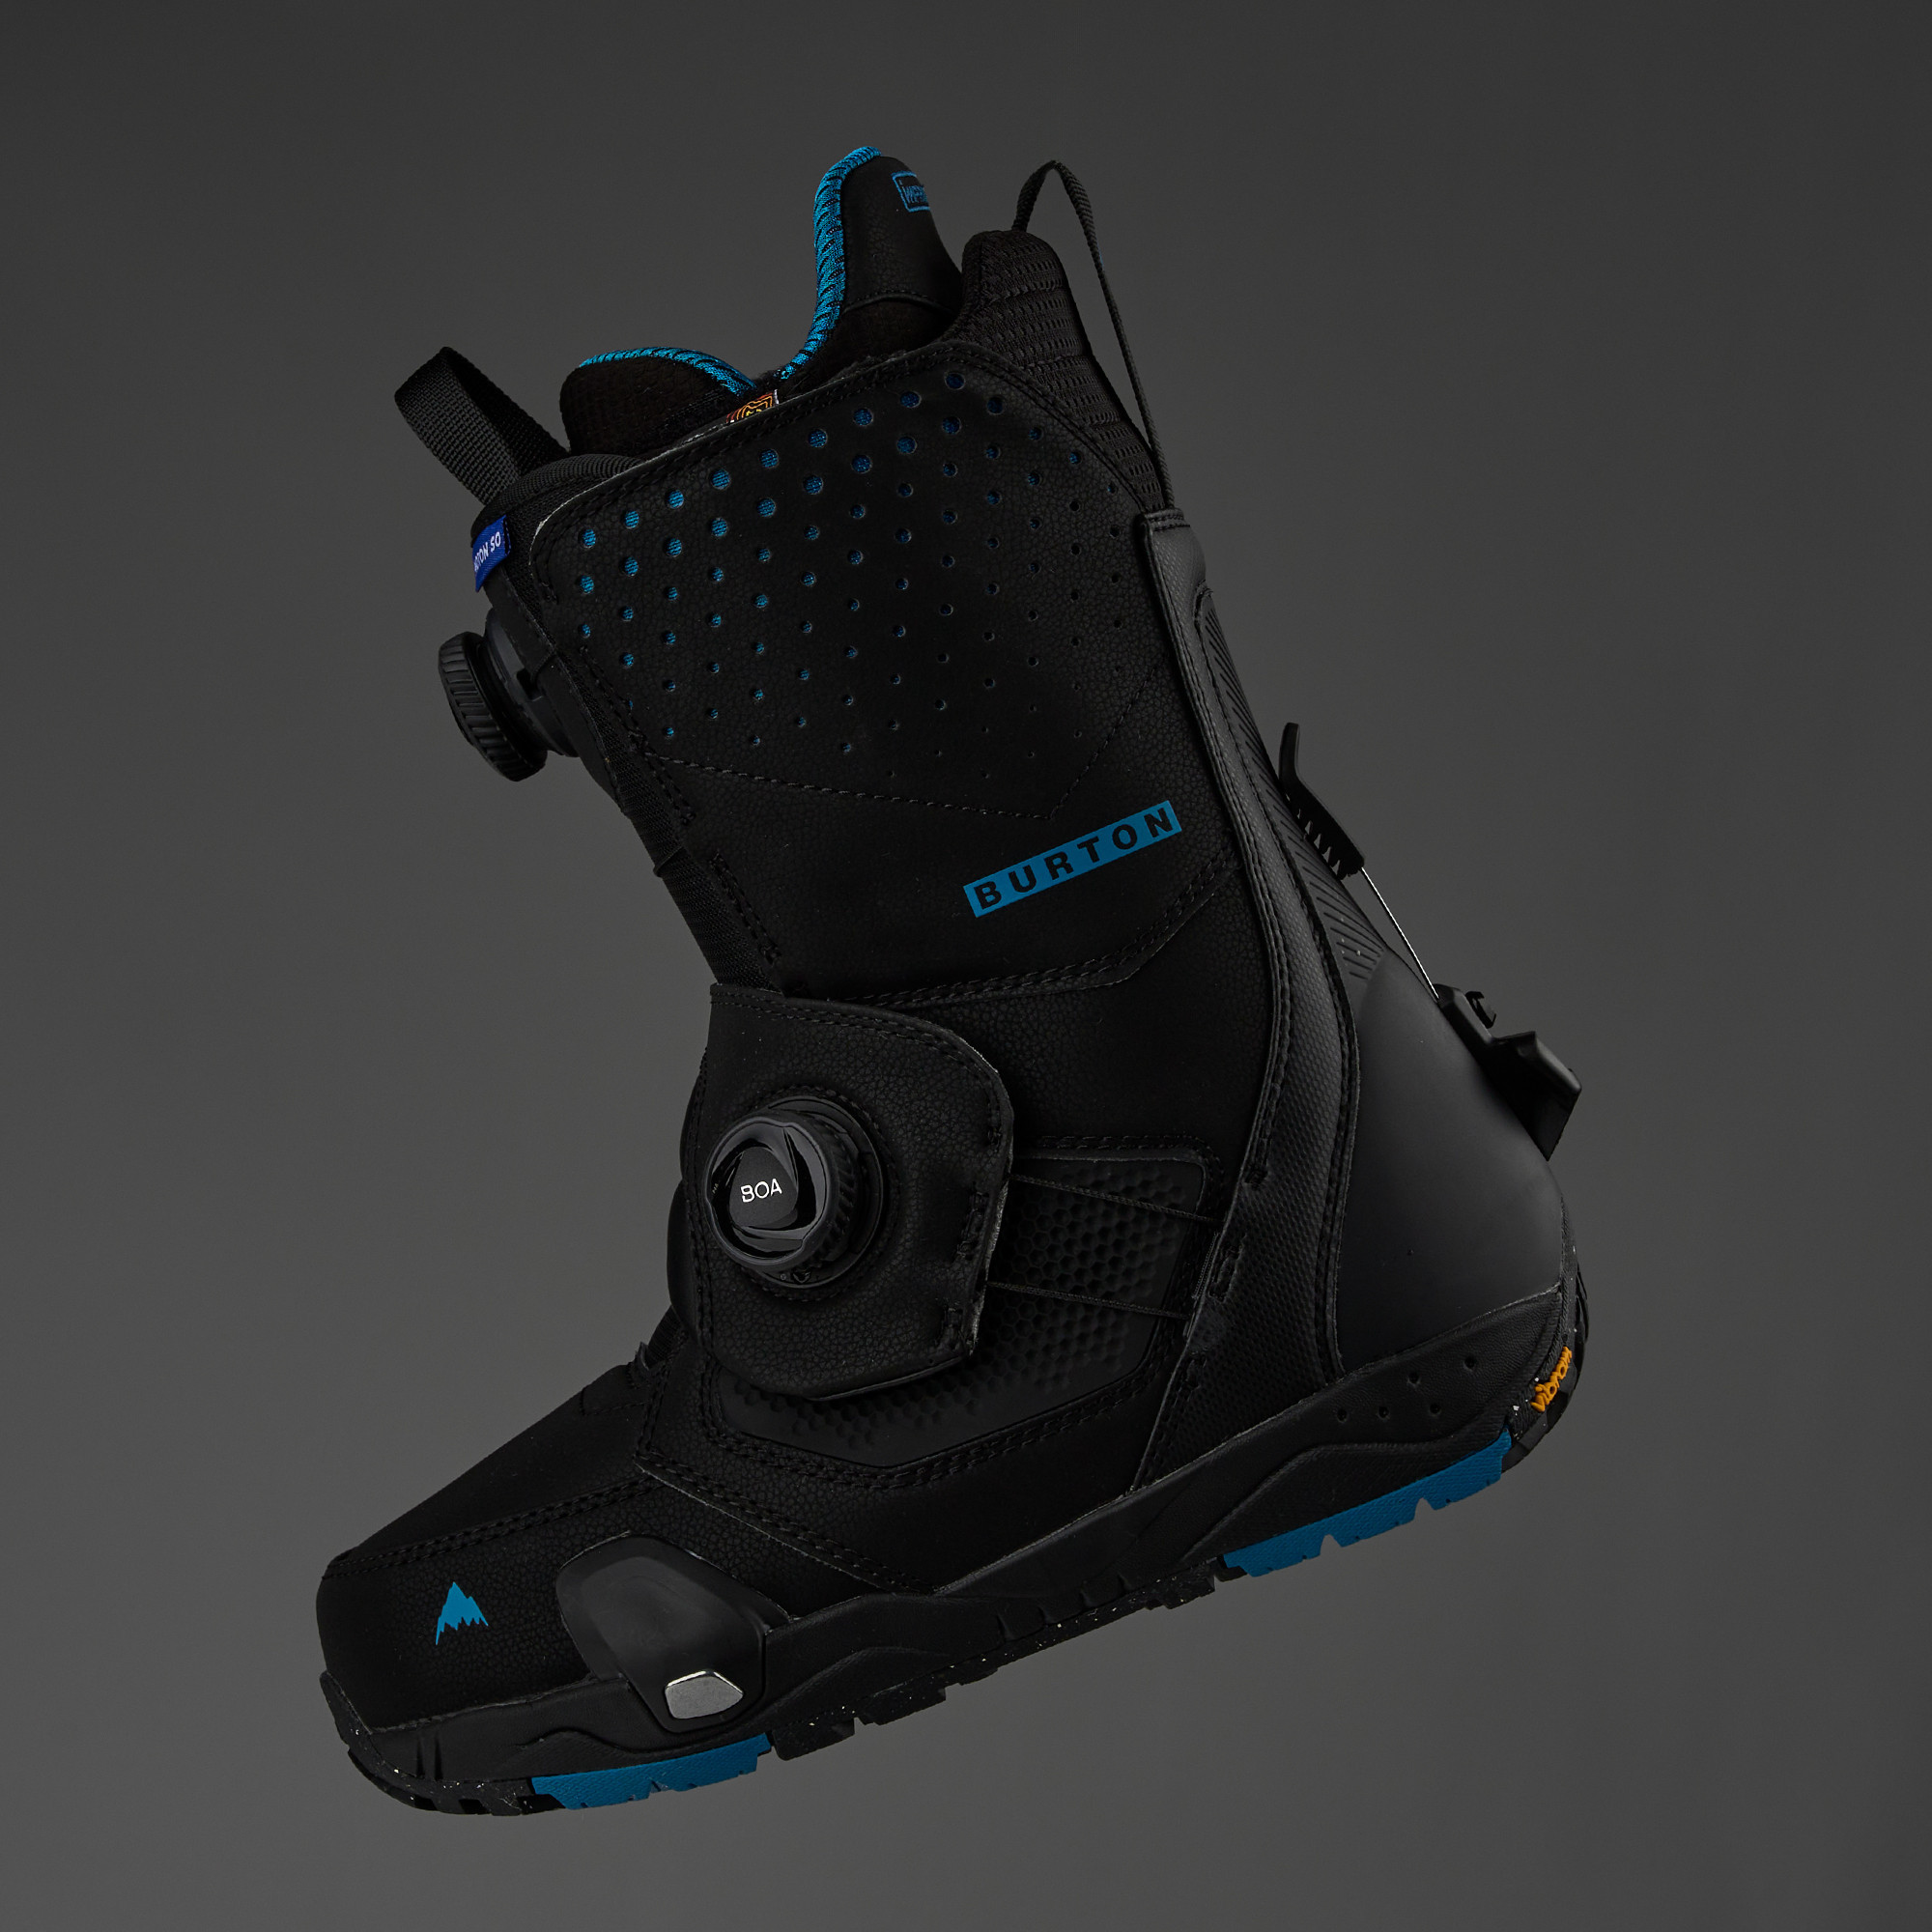 Men's Burton Photon Step On® Snowboard Boots (Wide)